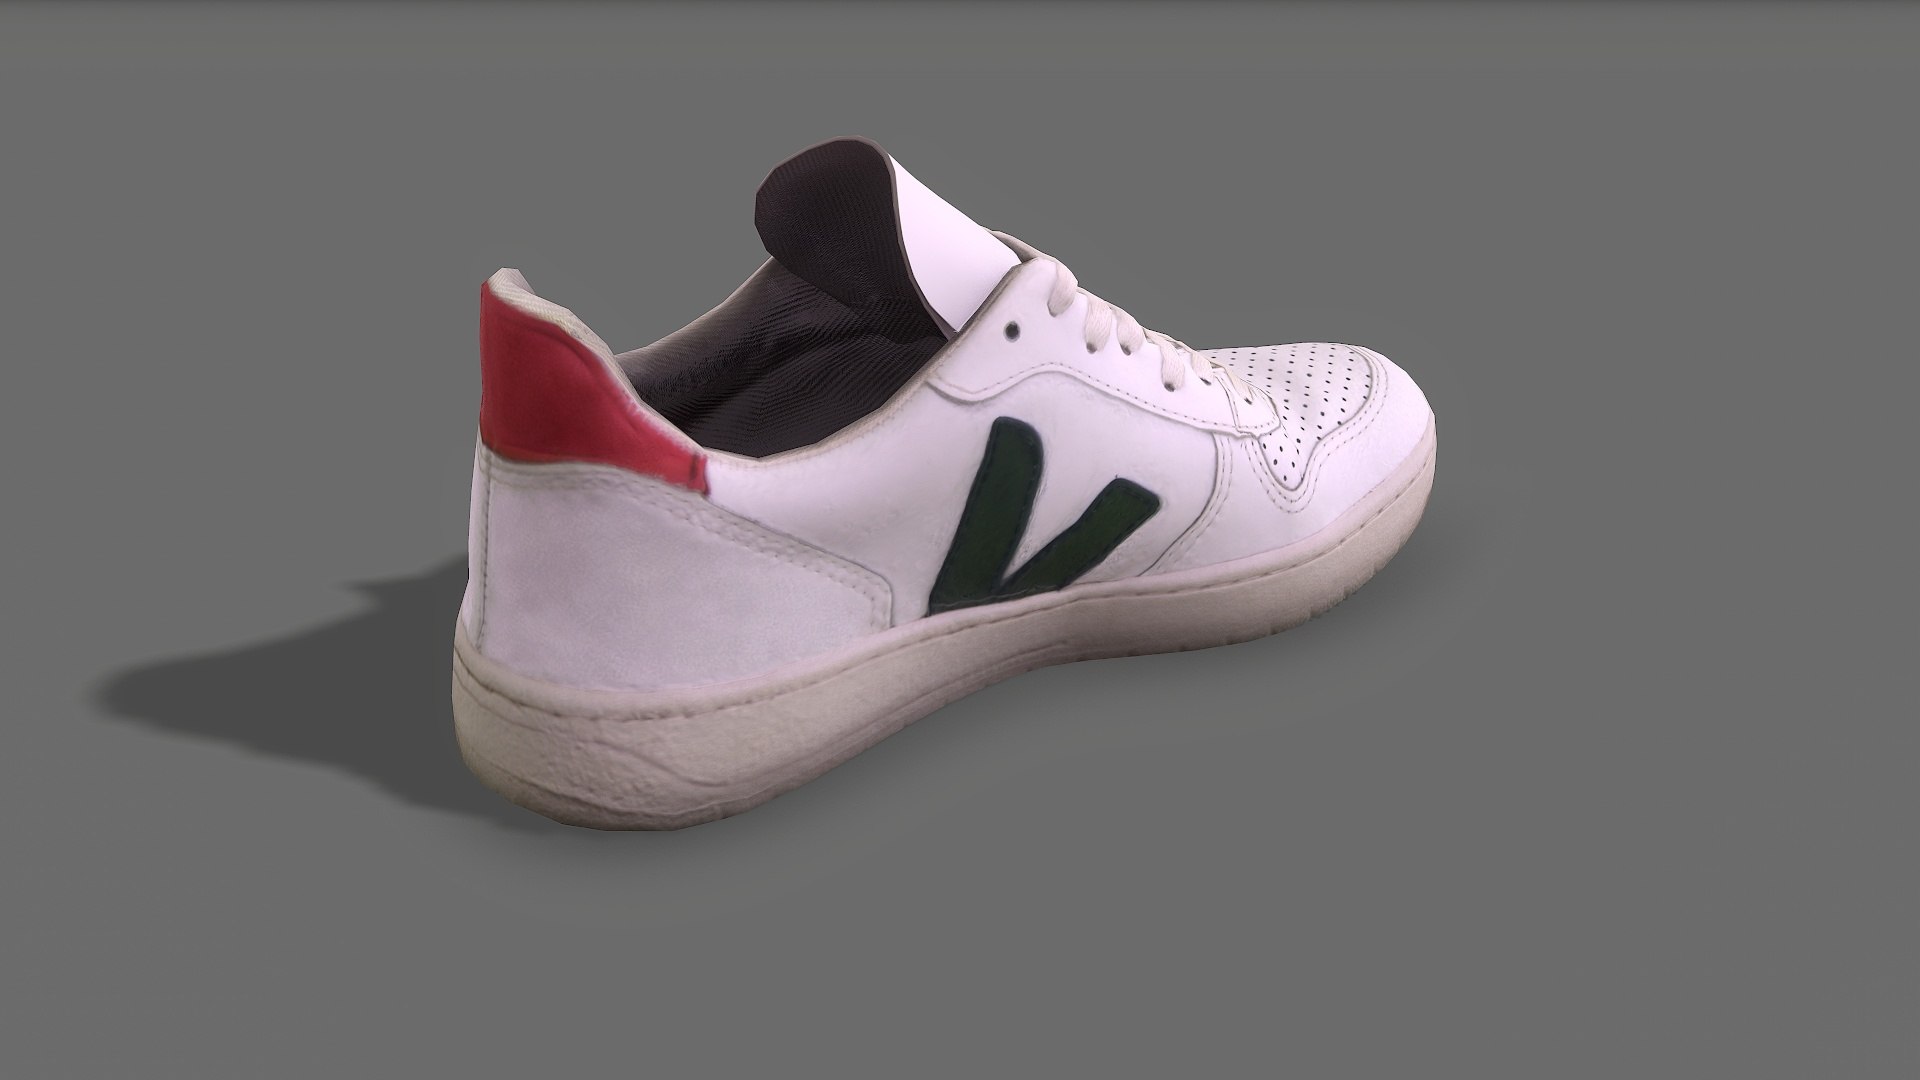 3D sneakers ready gaming shoe model - TurboSquid 1460707